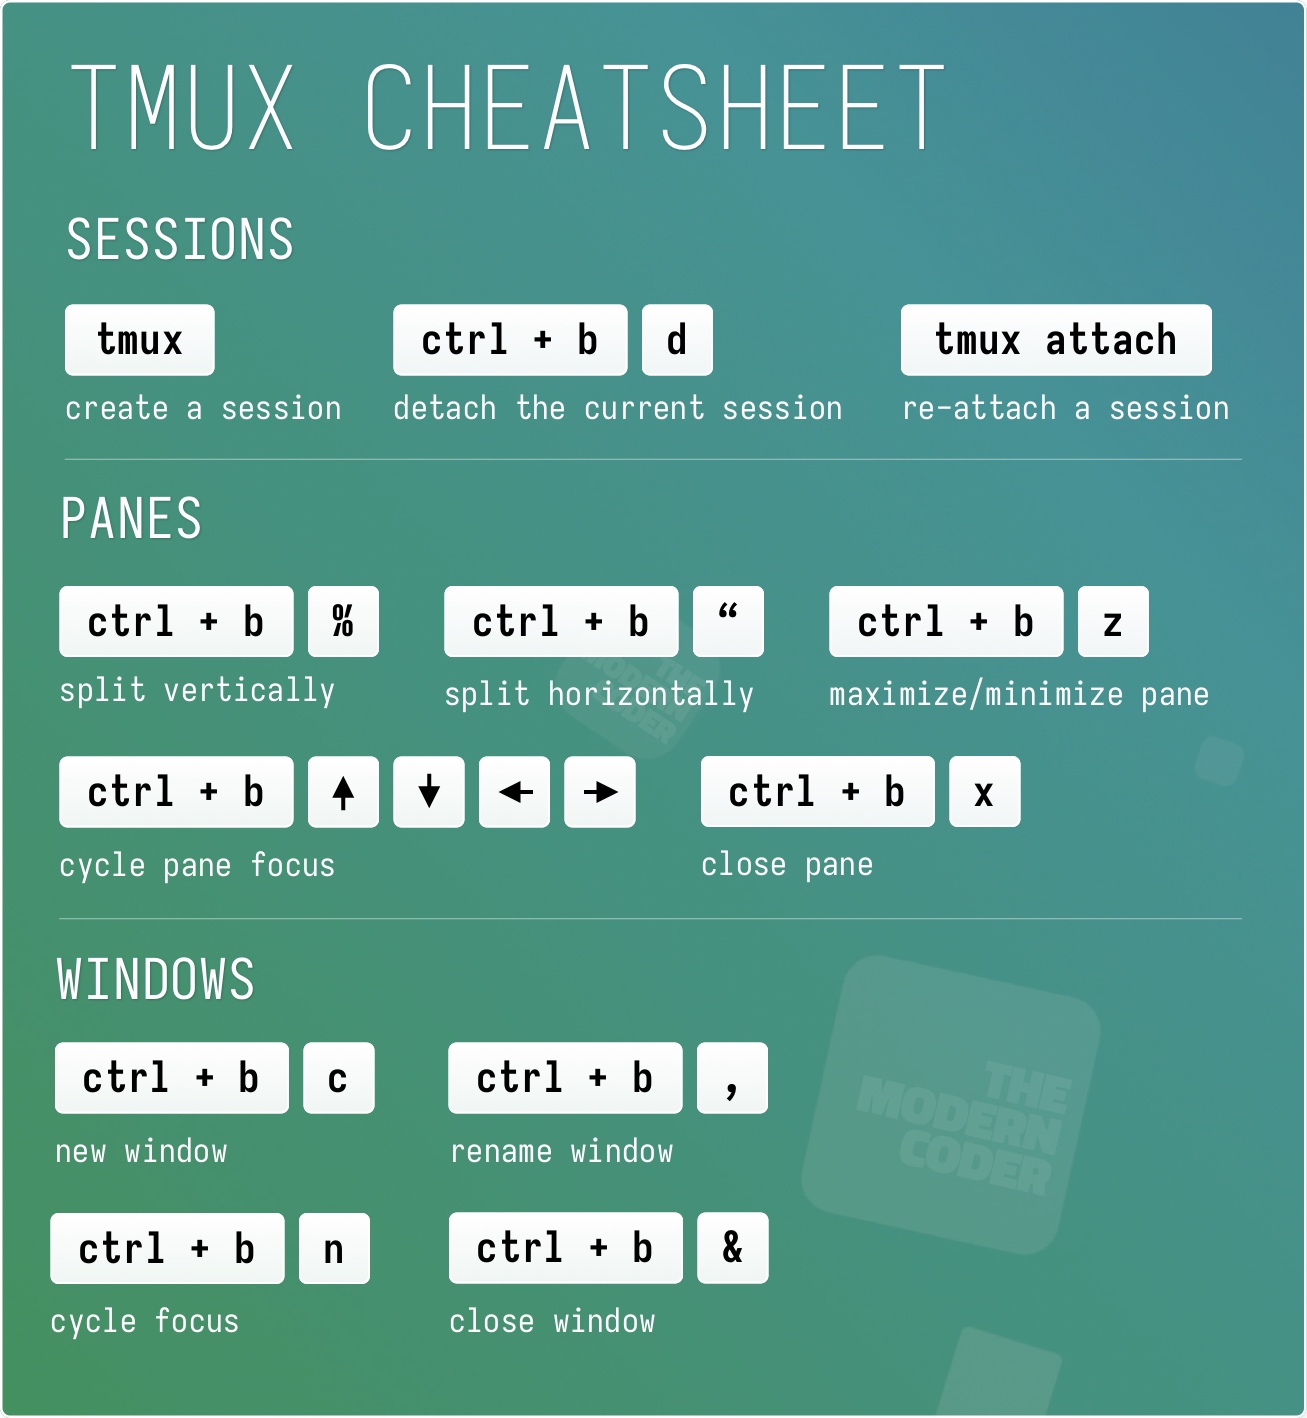 TMUX cheatsheet